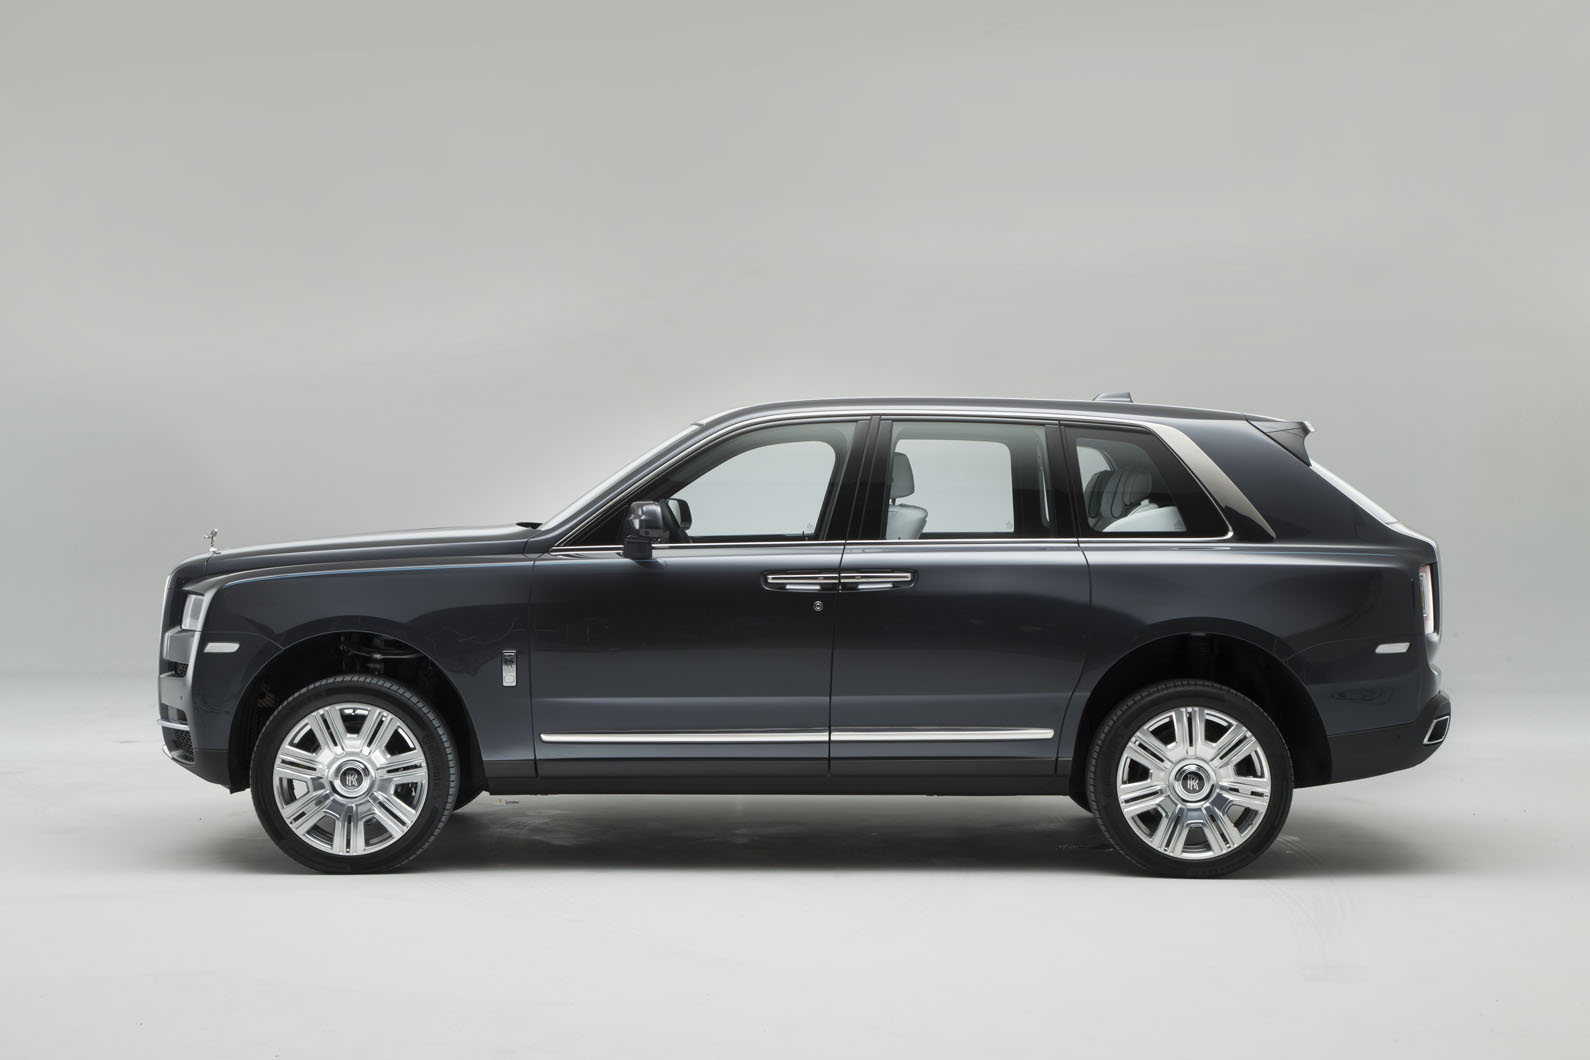 Rolls-Royce Project Cullinan previews upcoming SUV drivetrain